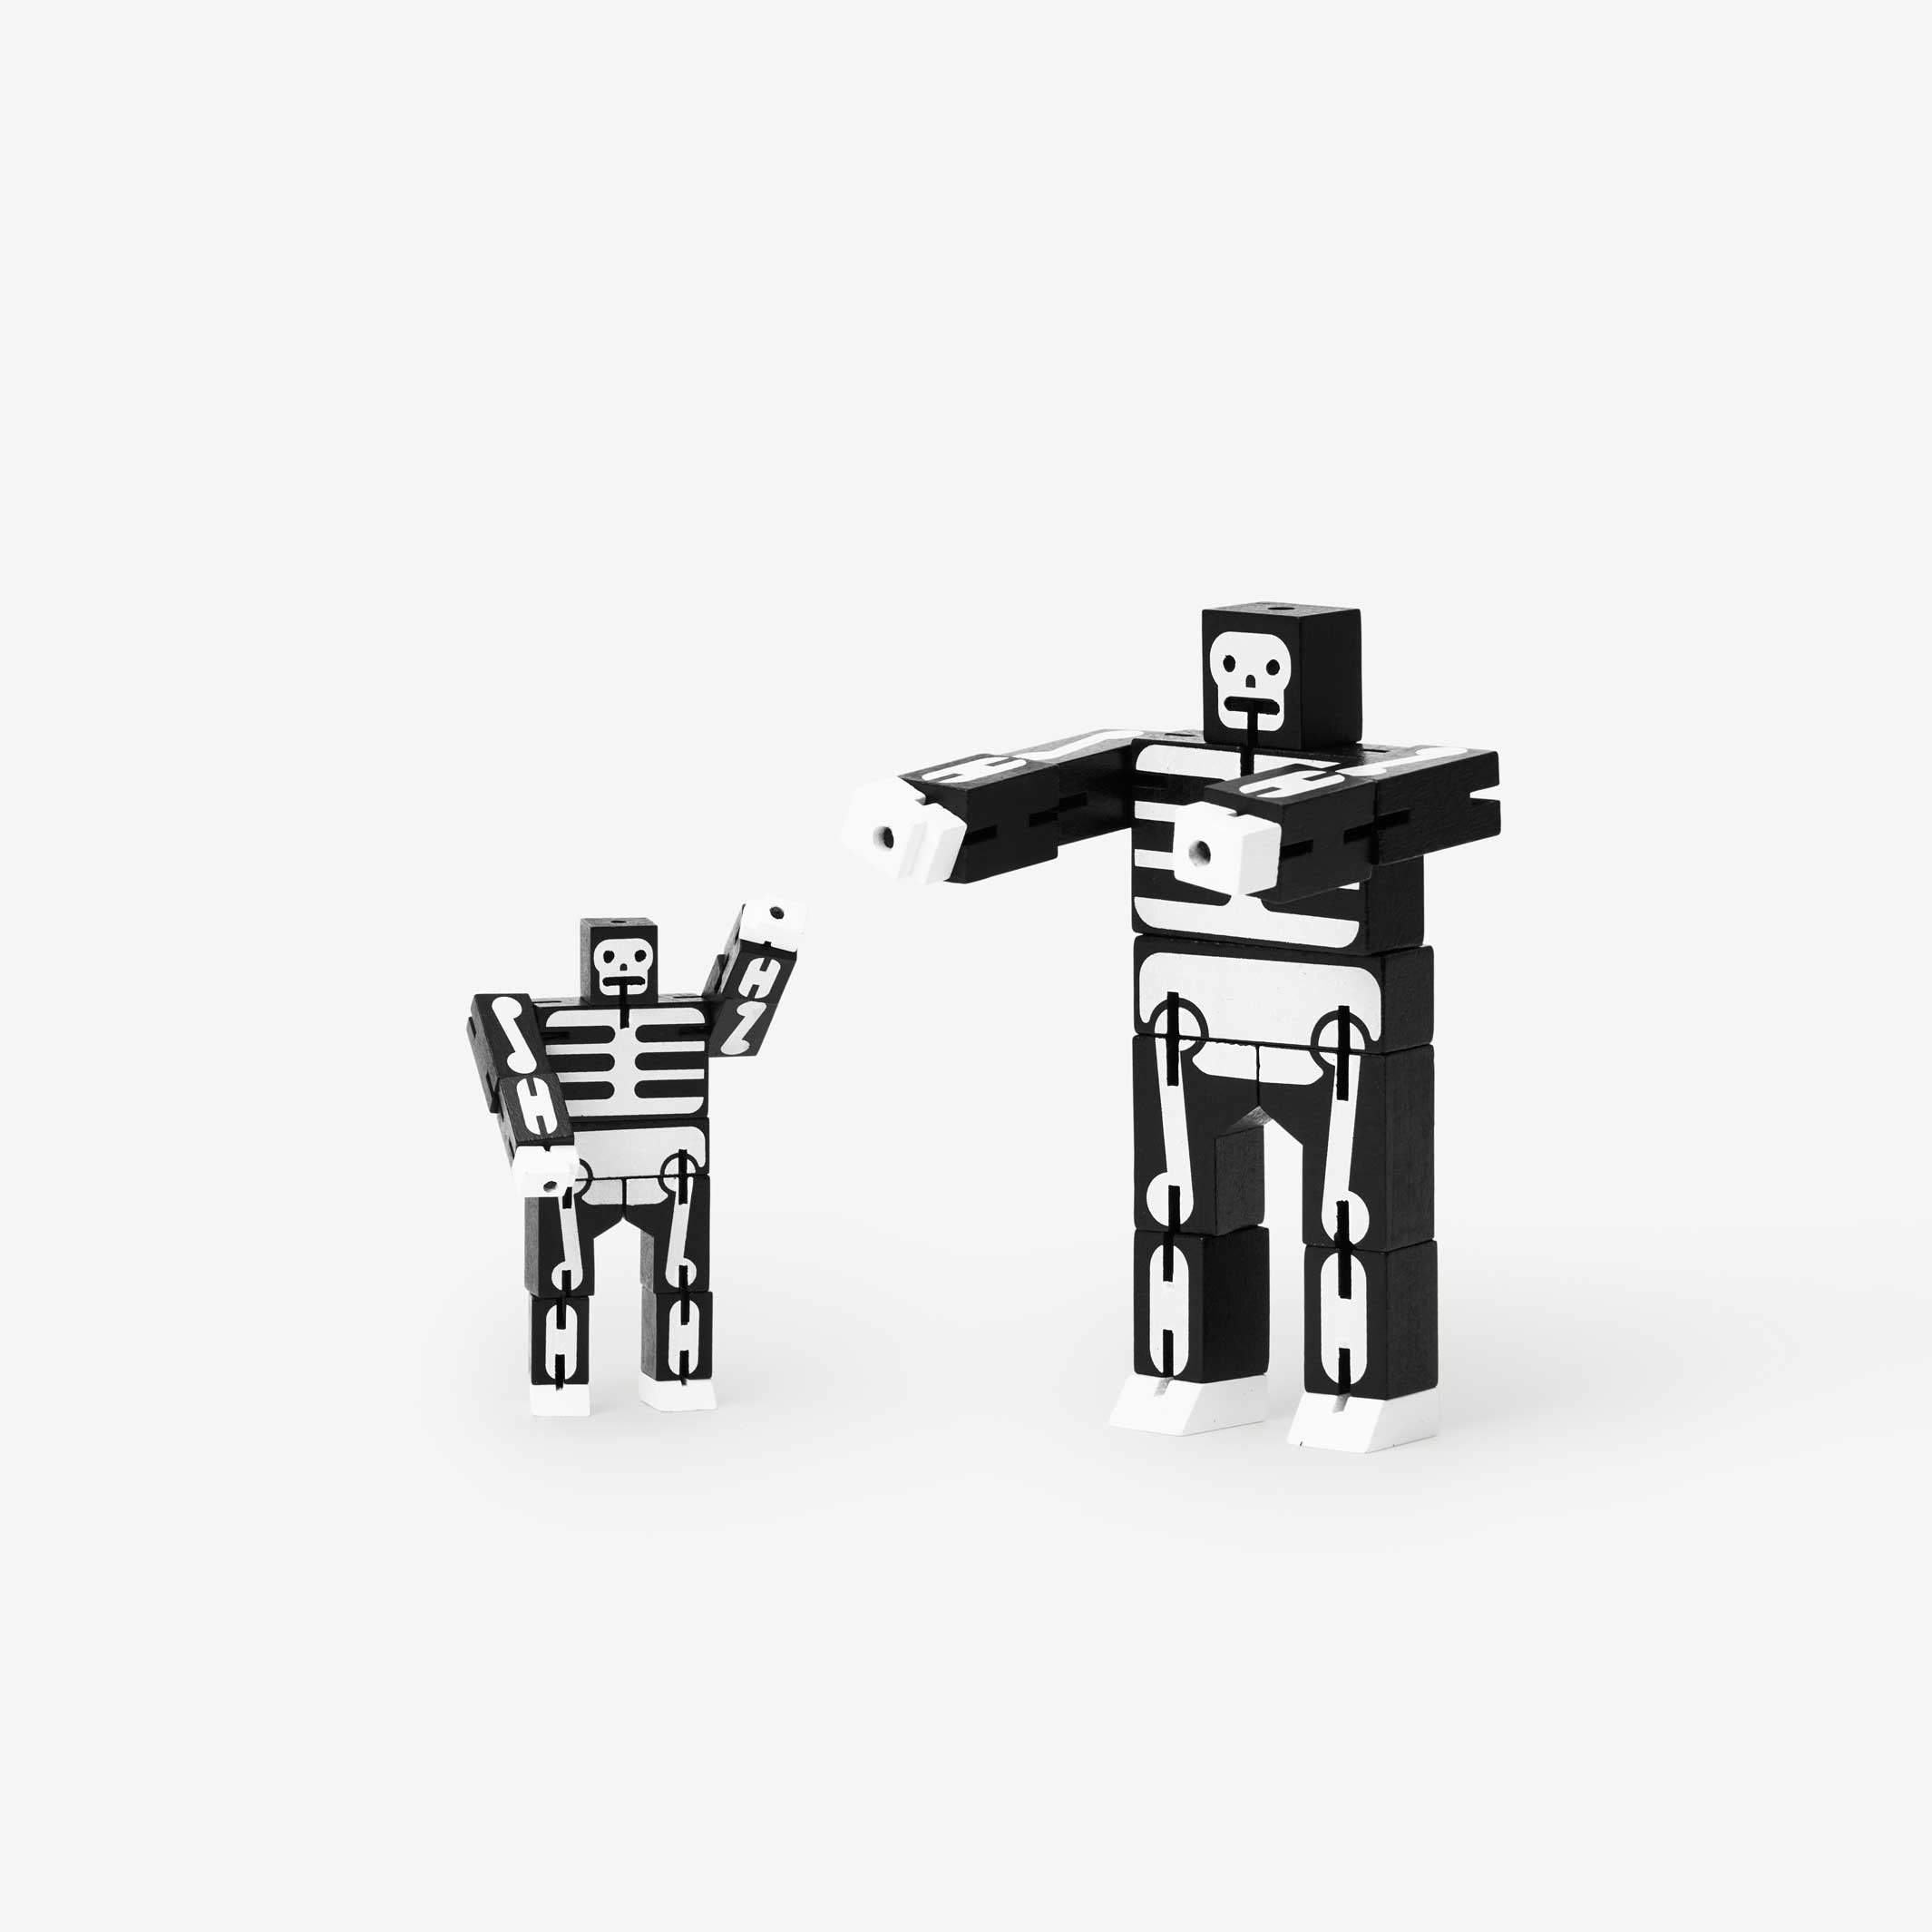 CUBEBOT Small SKELETON | 3D PUZZLE ROBOT | David Weeks | Areaware